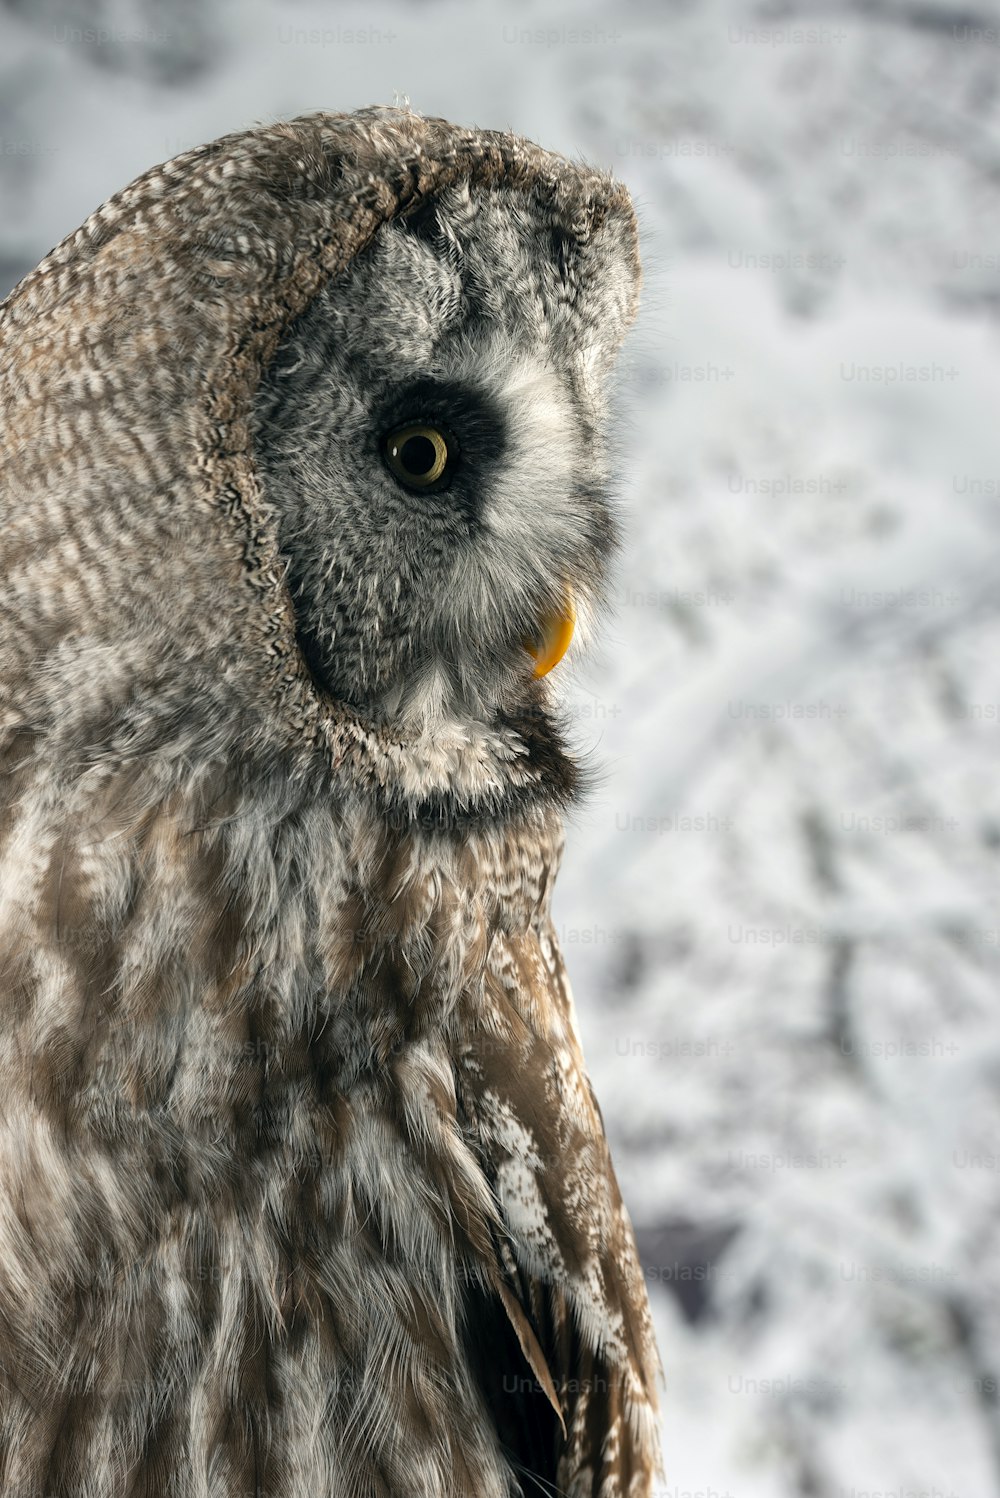 Beautiful portrait of Great Grey Owl Strix Nebulosa in studio setting with snowy Winter background